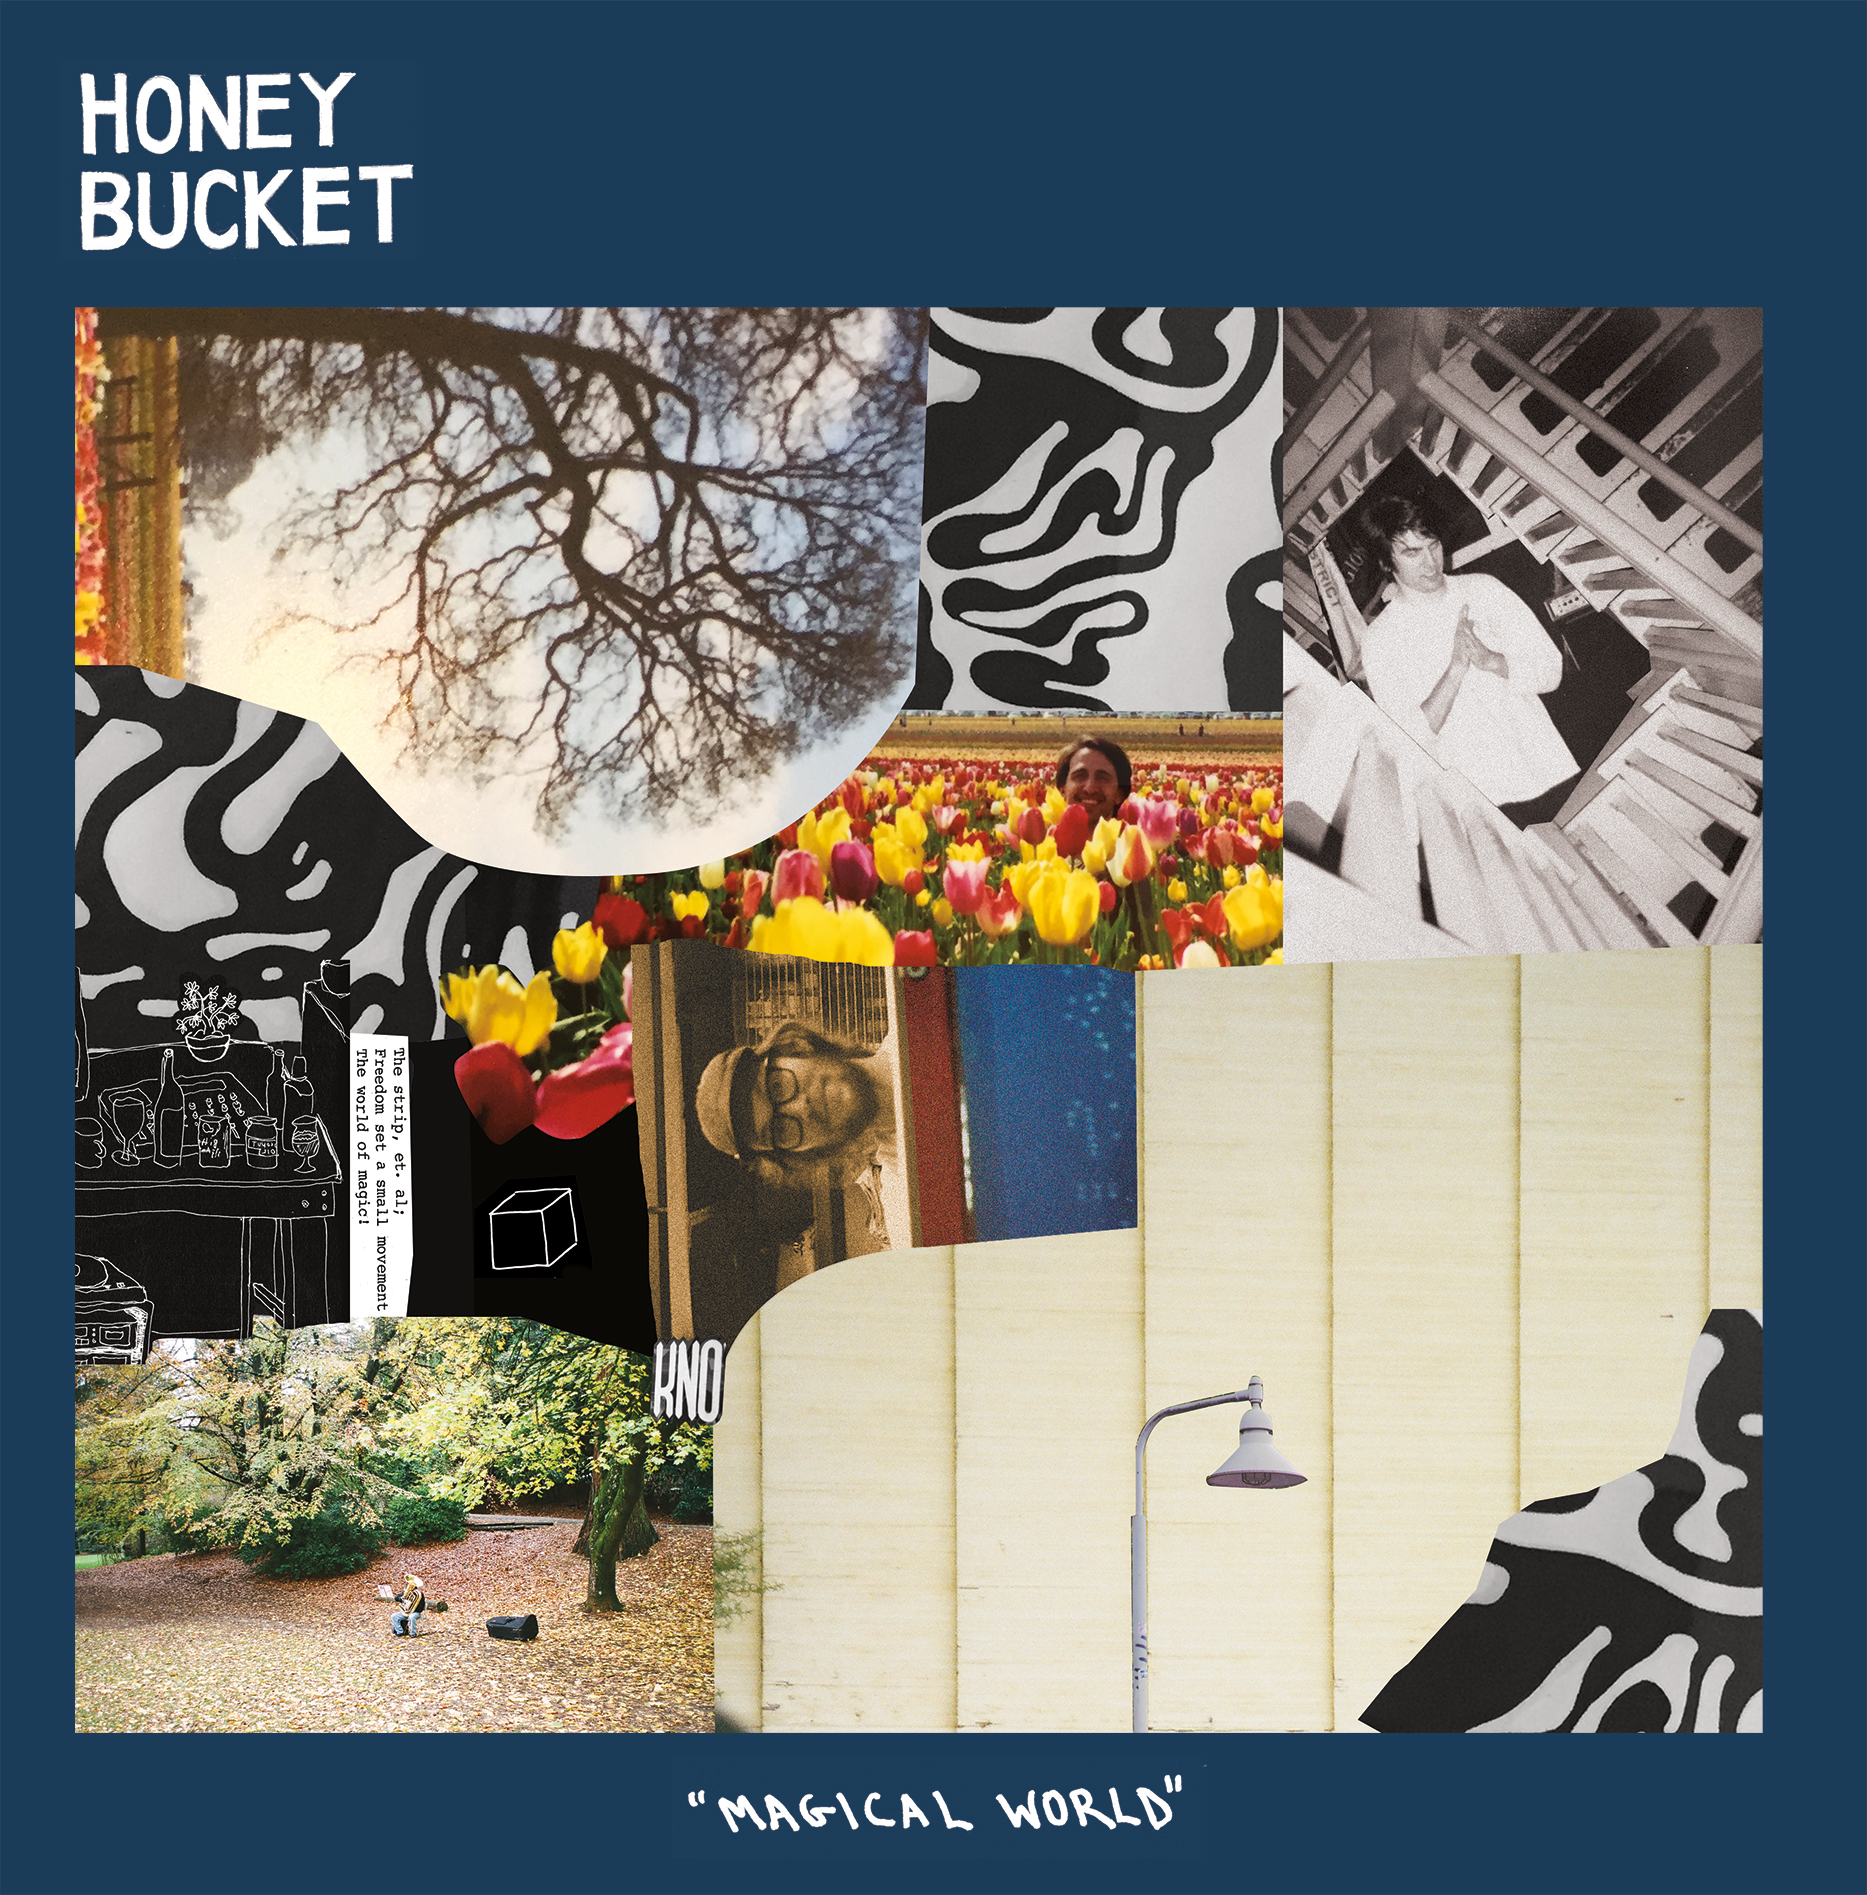 Honey Bucket Wander and Wonder Through Their 'Magical World' on Latest Album